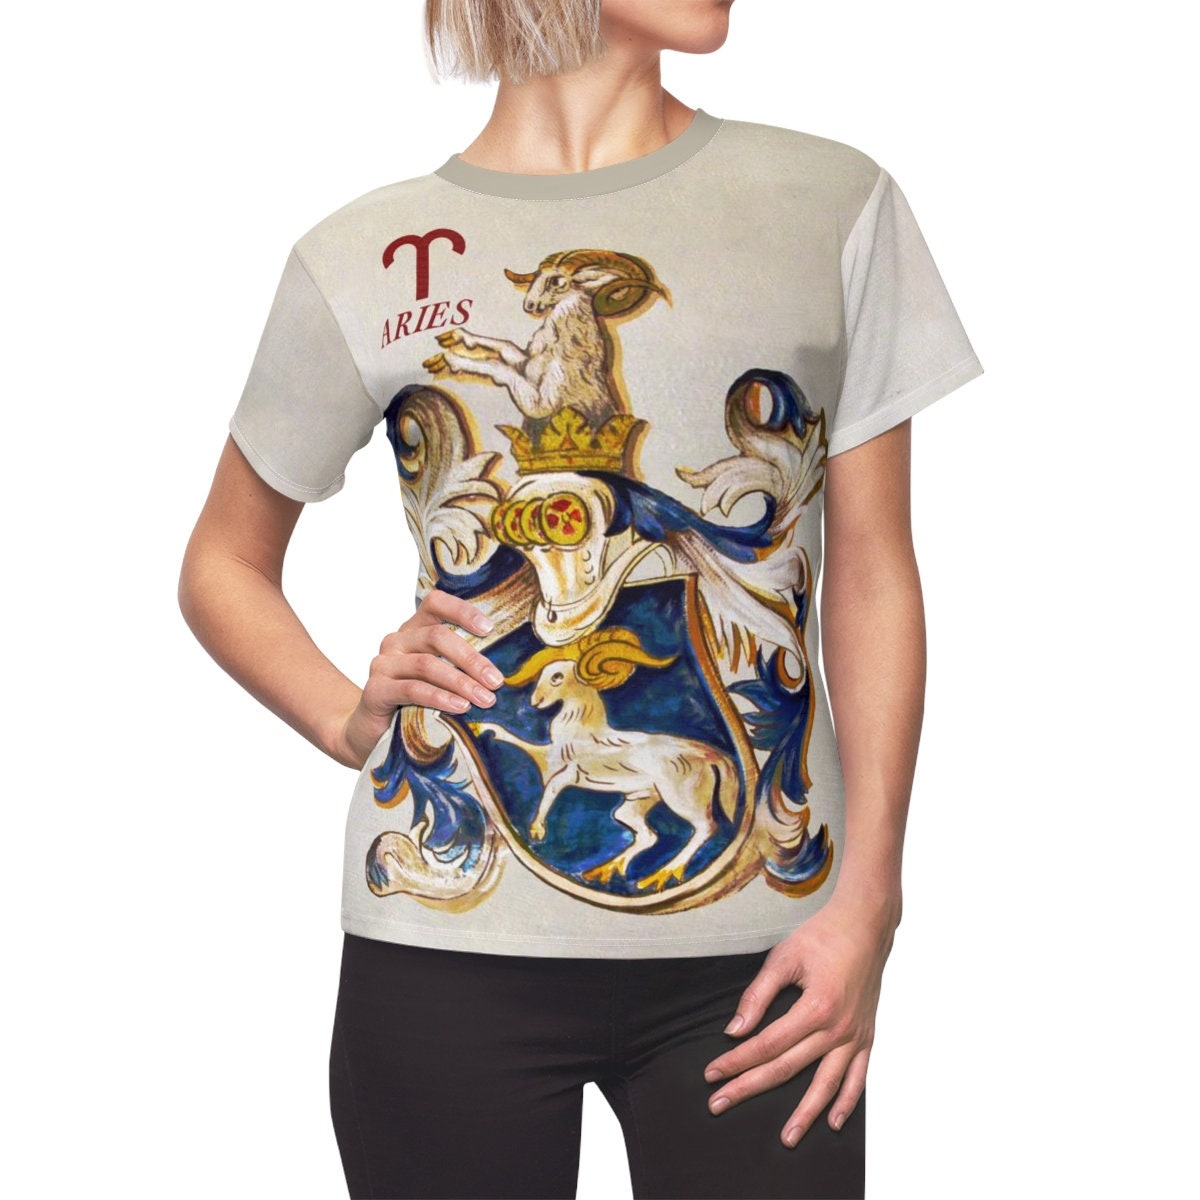 Aries / Astrology / Women / Zodiac / T-shirt / Tee / Shirt / Vintage / Art / Aries / Birthday / Clothing / Gift for Her - Chloe Lambertin